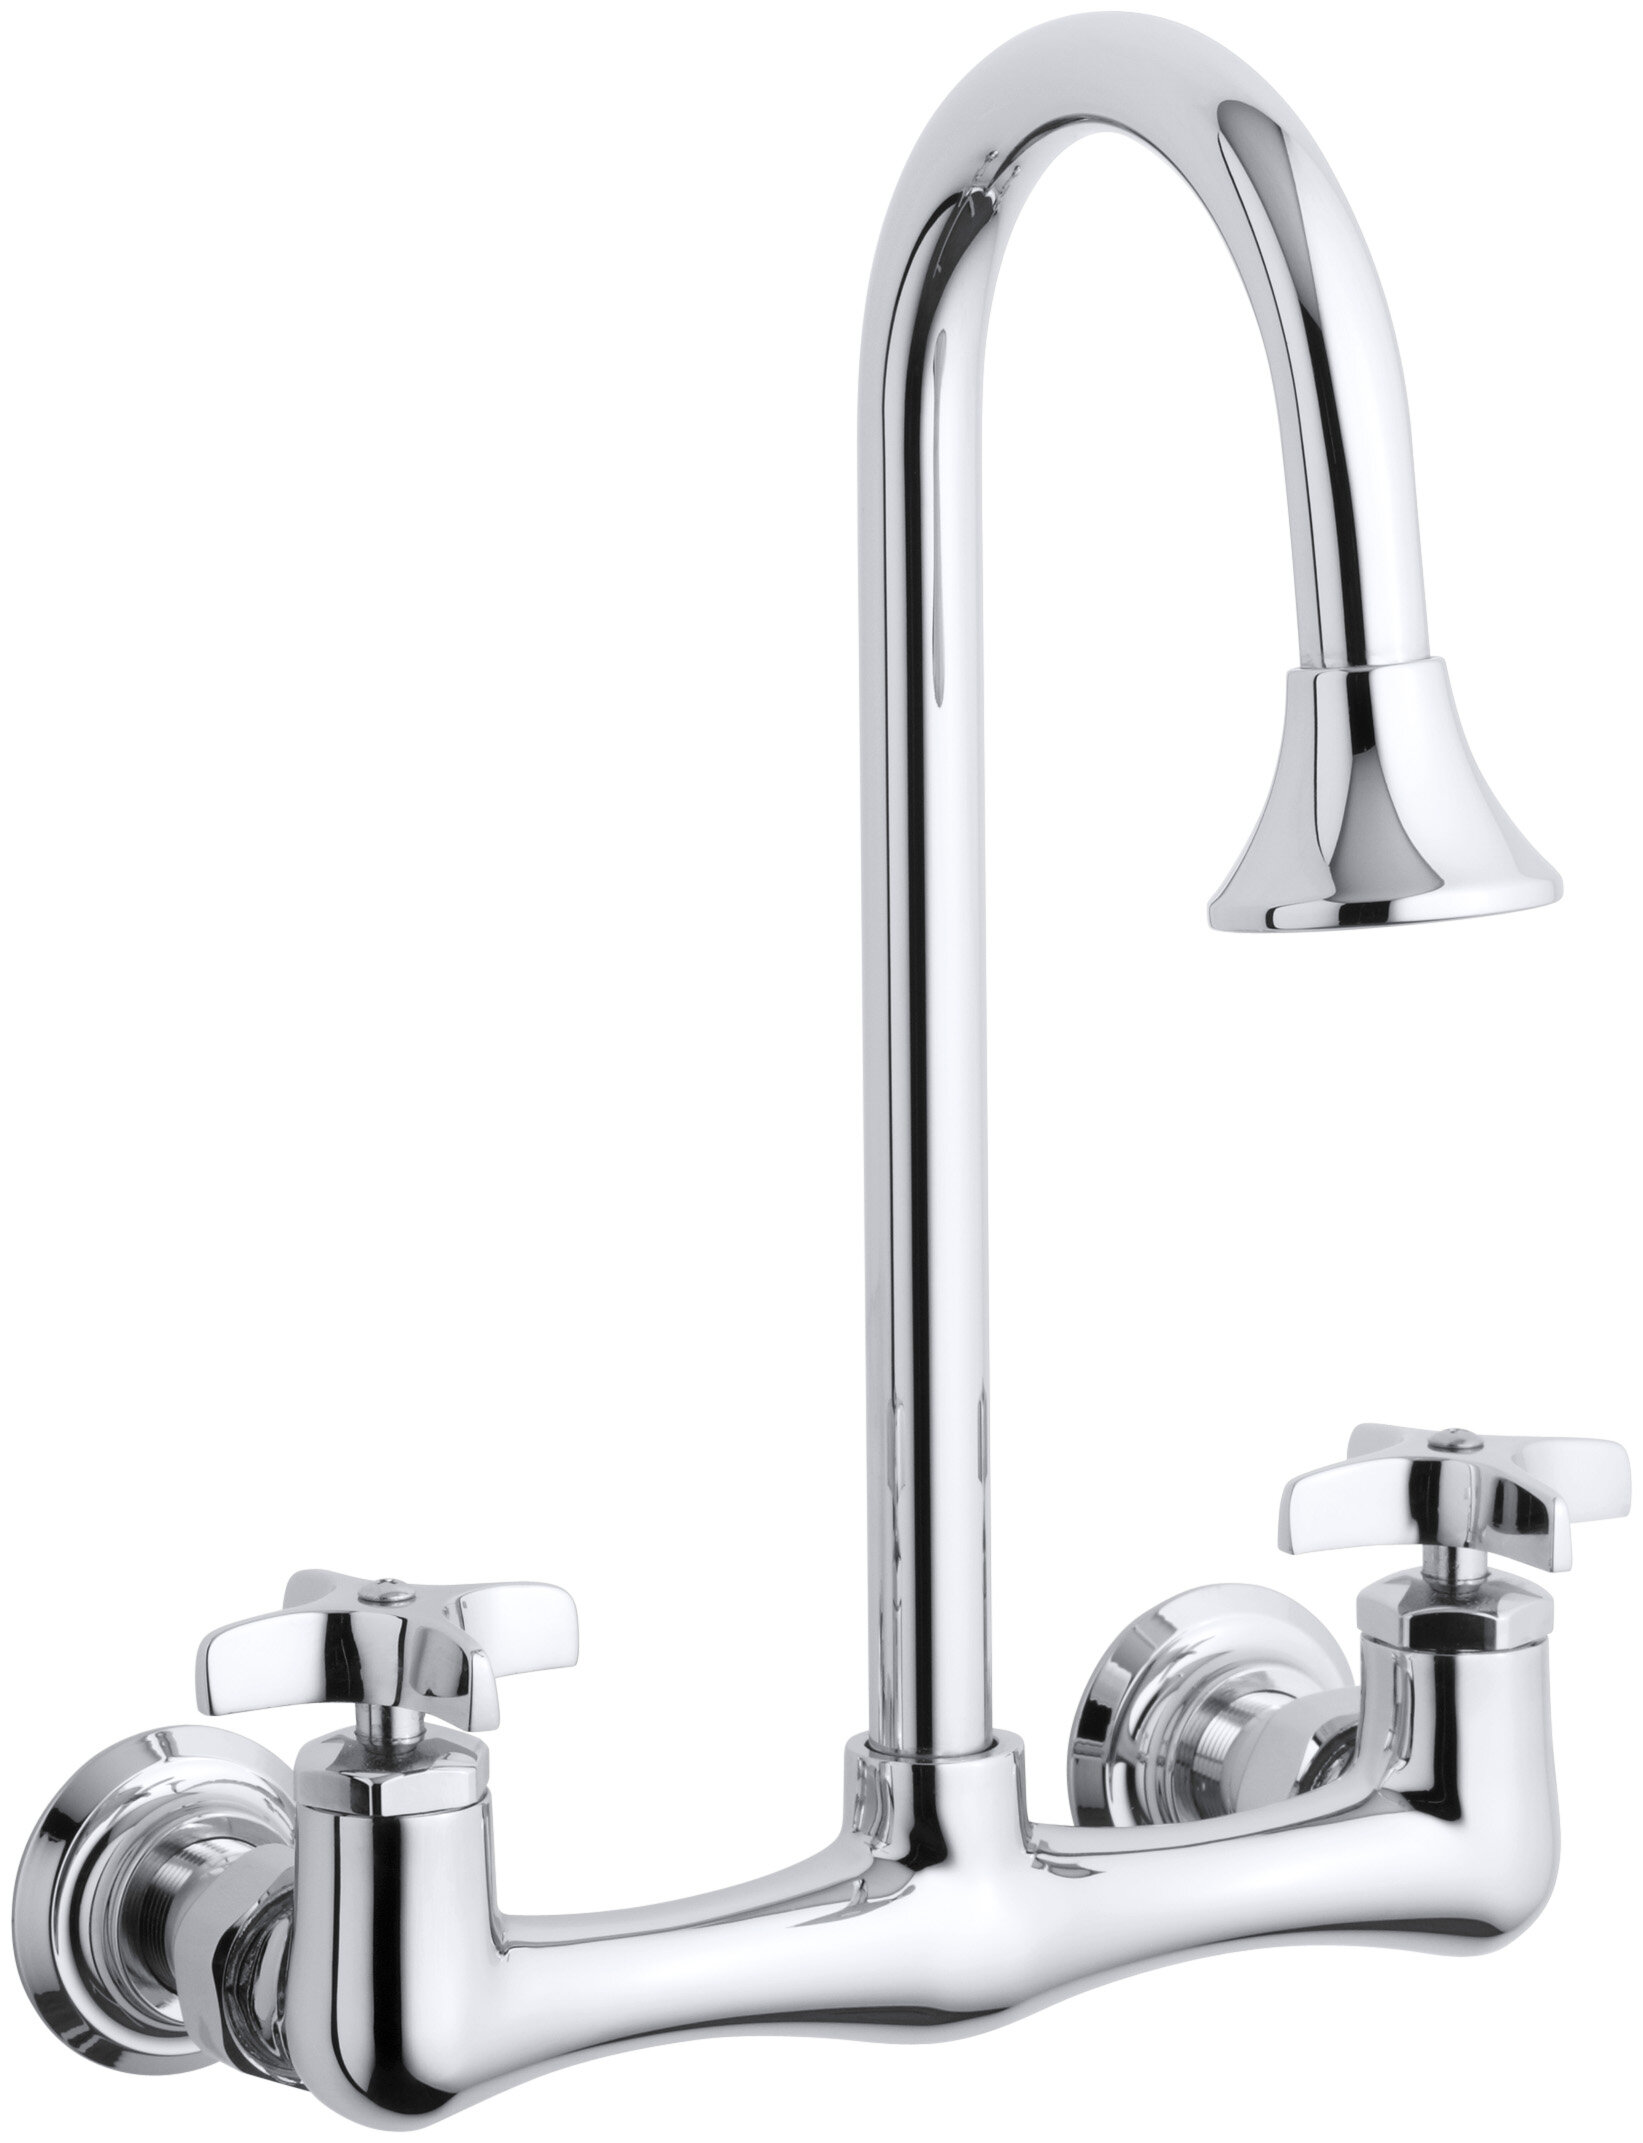 Kohler Triton Double Cross Handle Utility Sink Faucet With